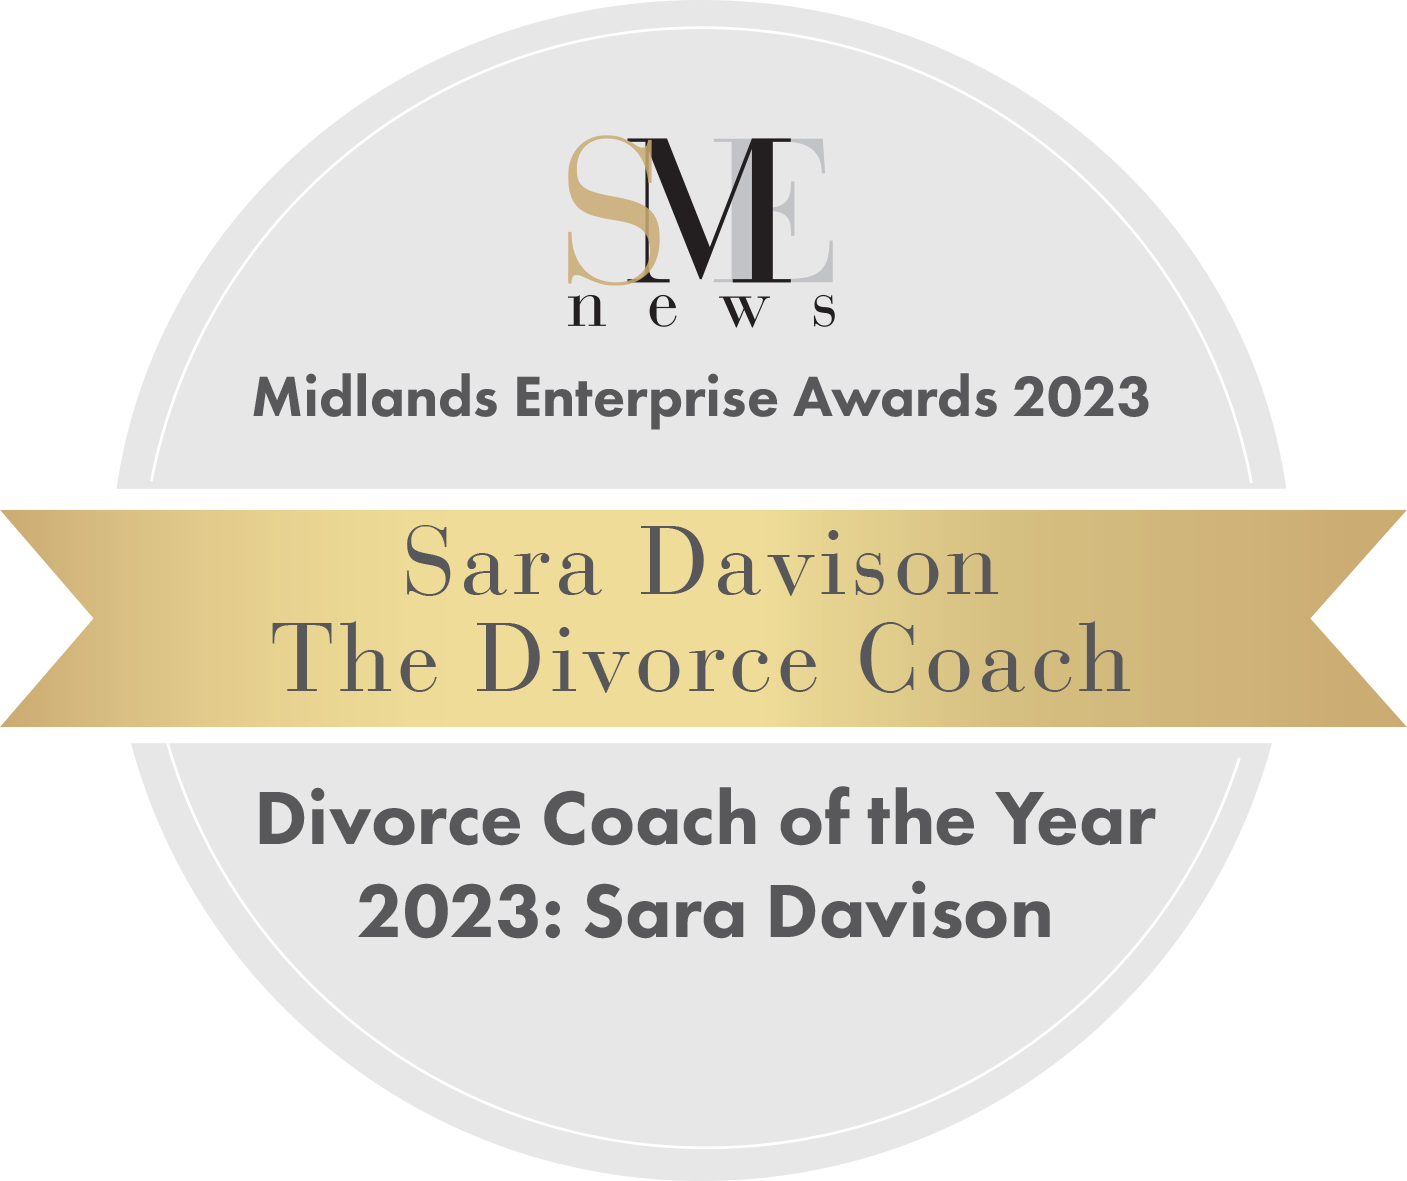 sme-news-sara-davison-divorce-coach-of-the-year-2023